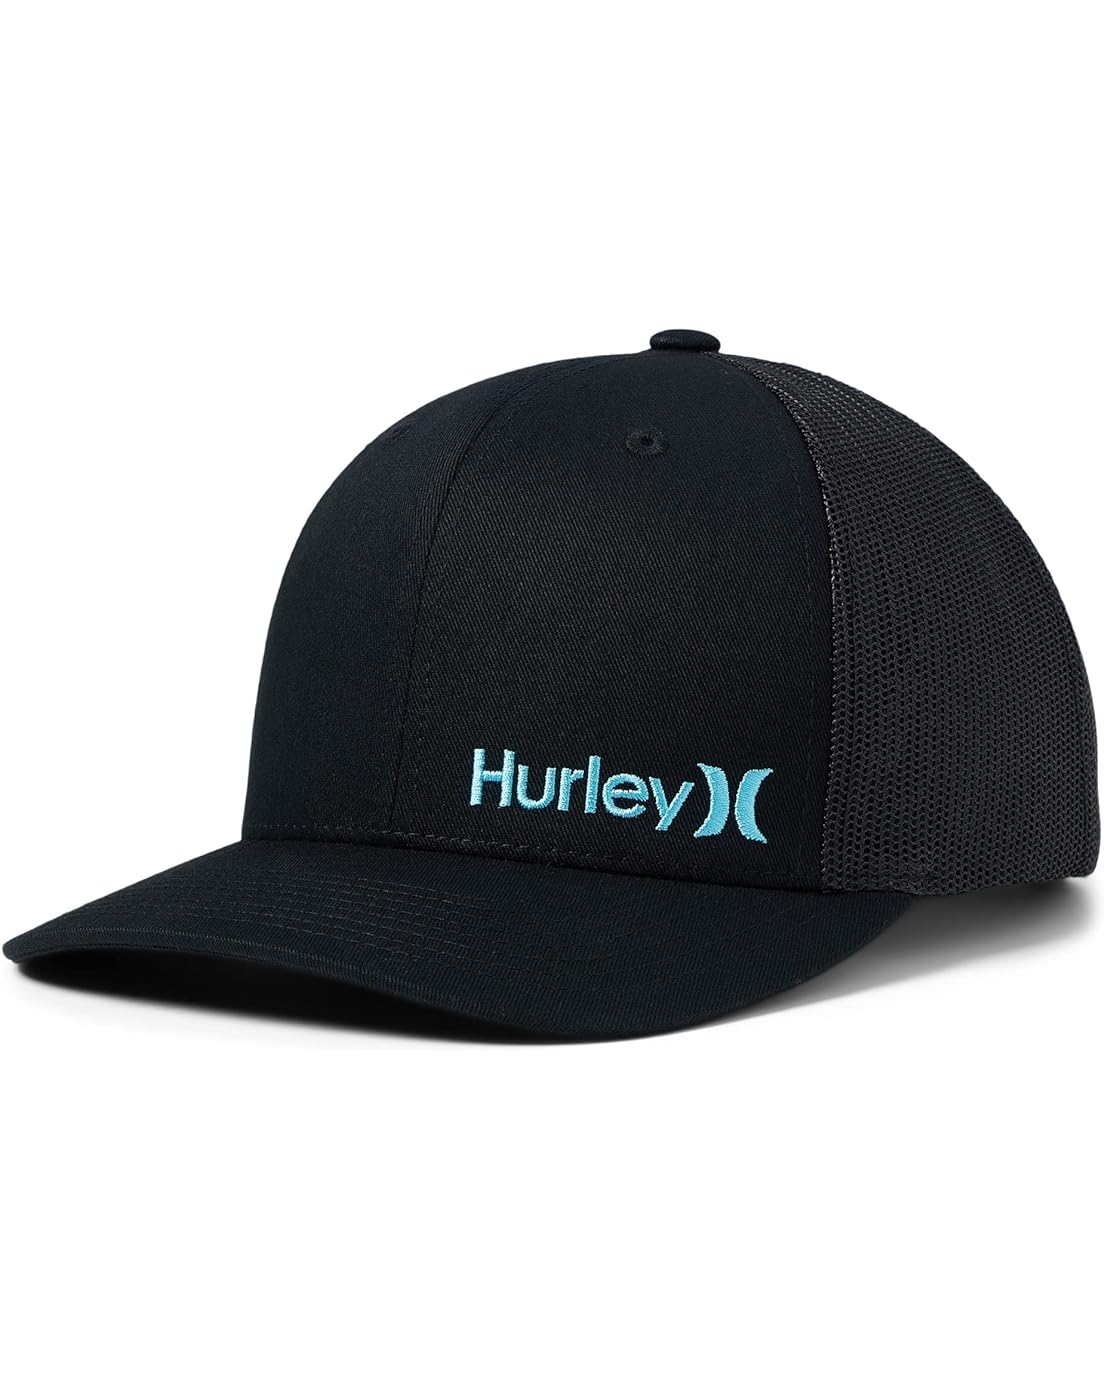 Hurley Corp Staple Trucker